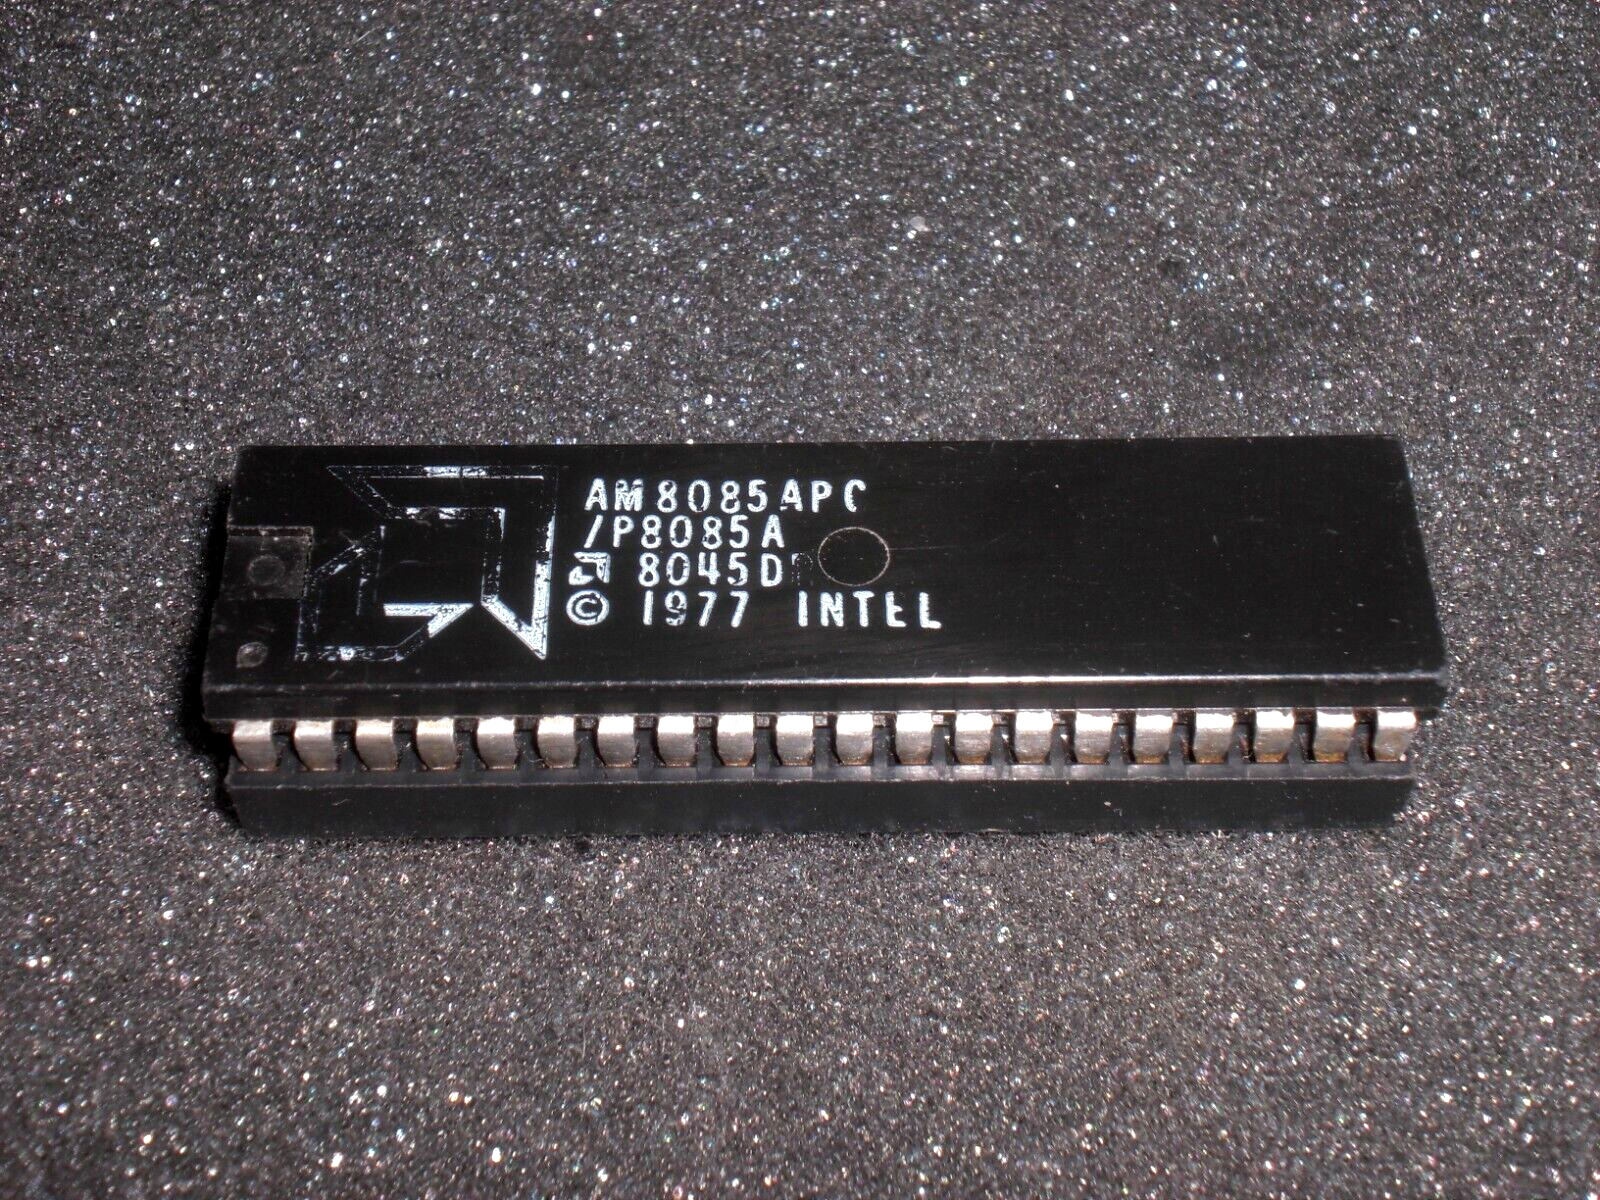 Vintage Intel AM8085APC P8085A Microprocessor 8045D 1977 Organ Synthesizer IC GC